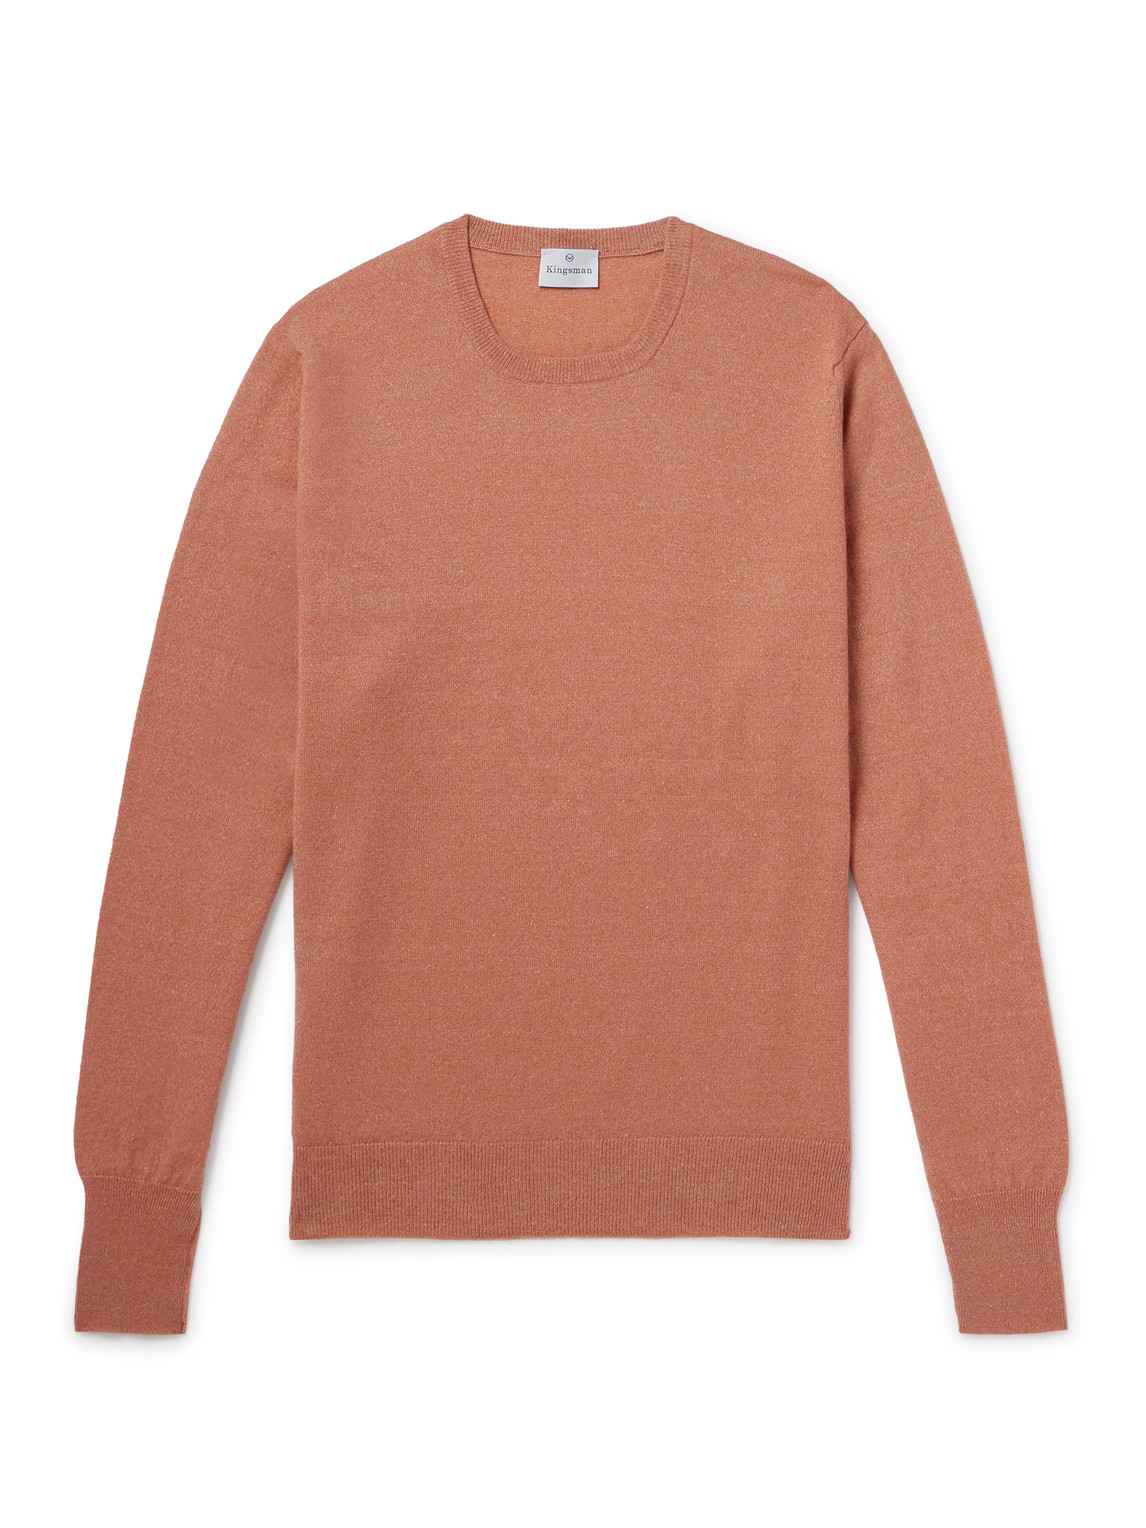 Kingsman Cashmere And Linen-blend Sweater In Orange